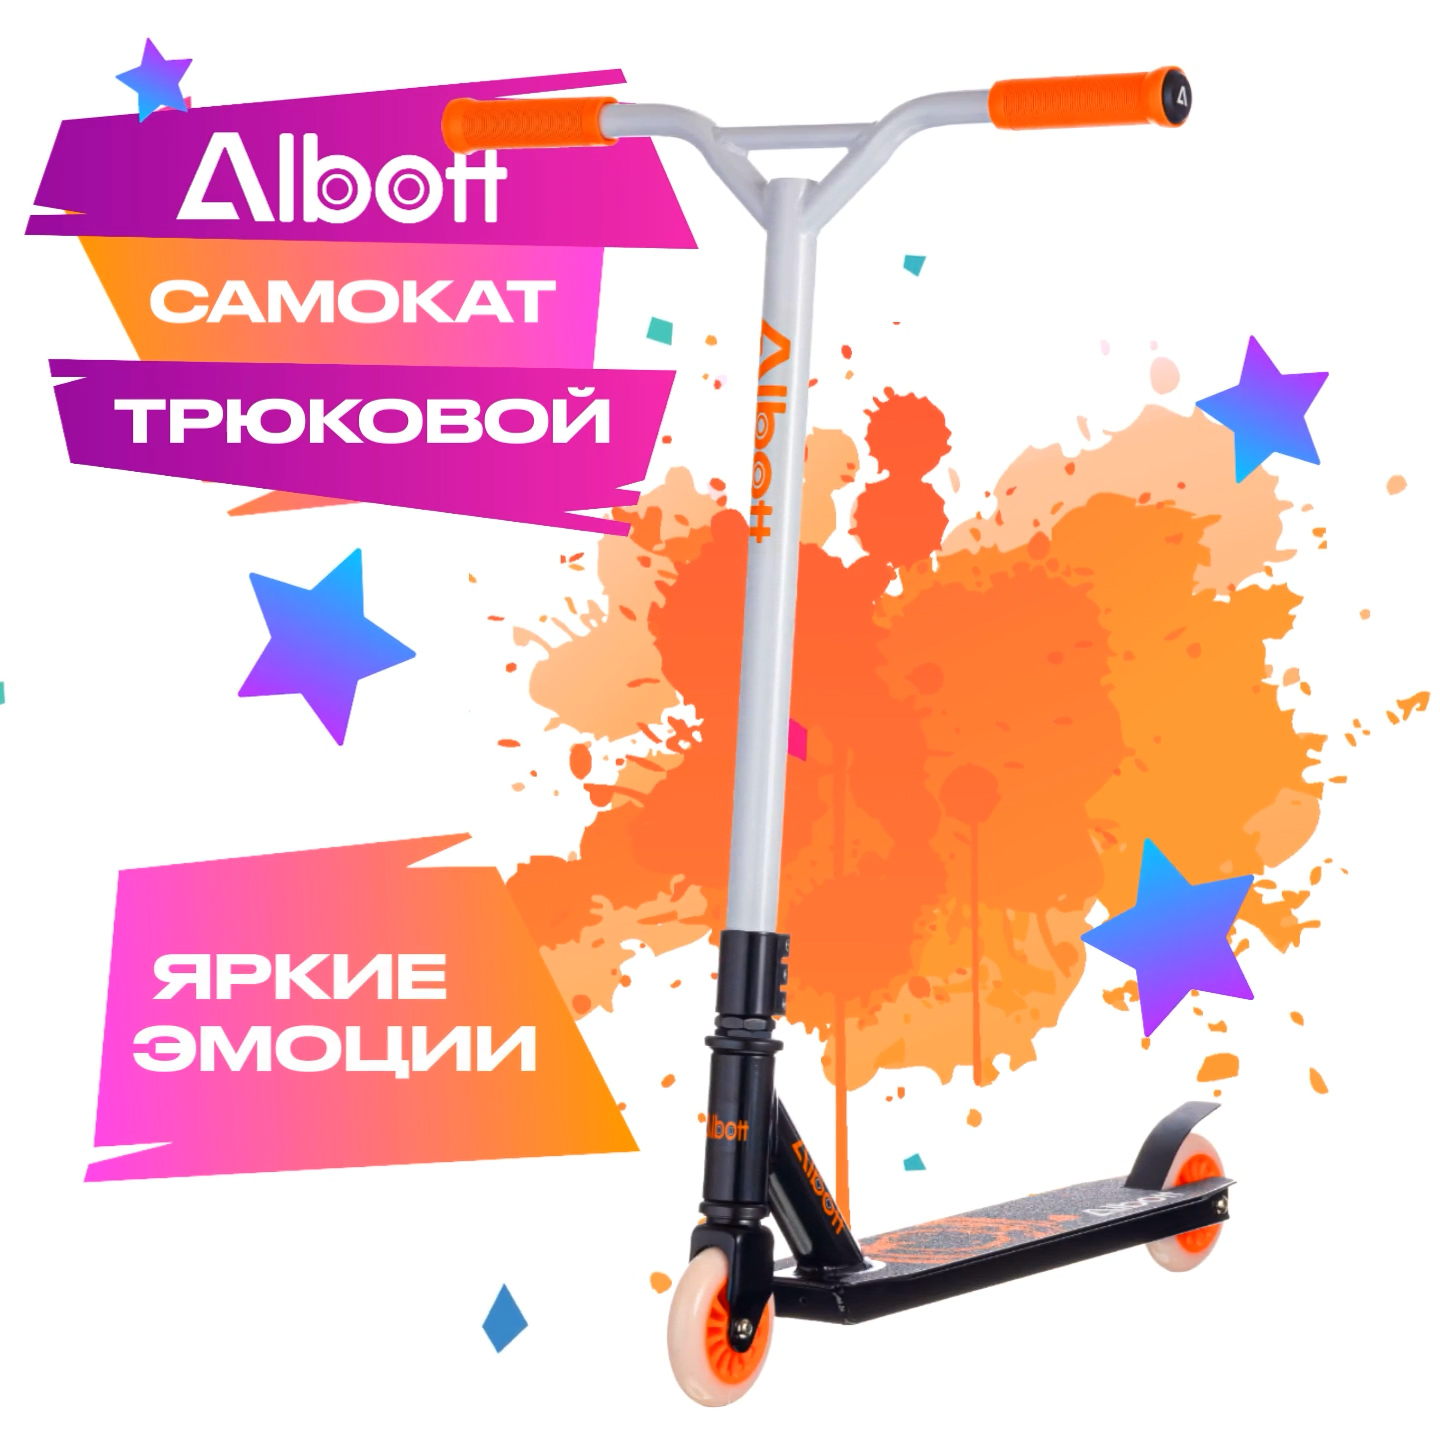 Albott S-062 Самокат трюковой, Orange